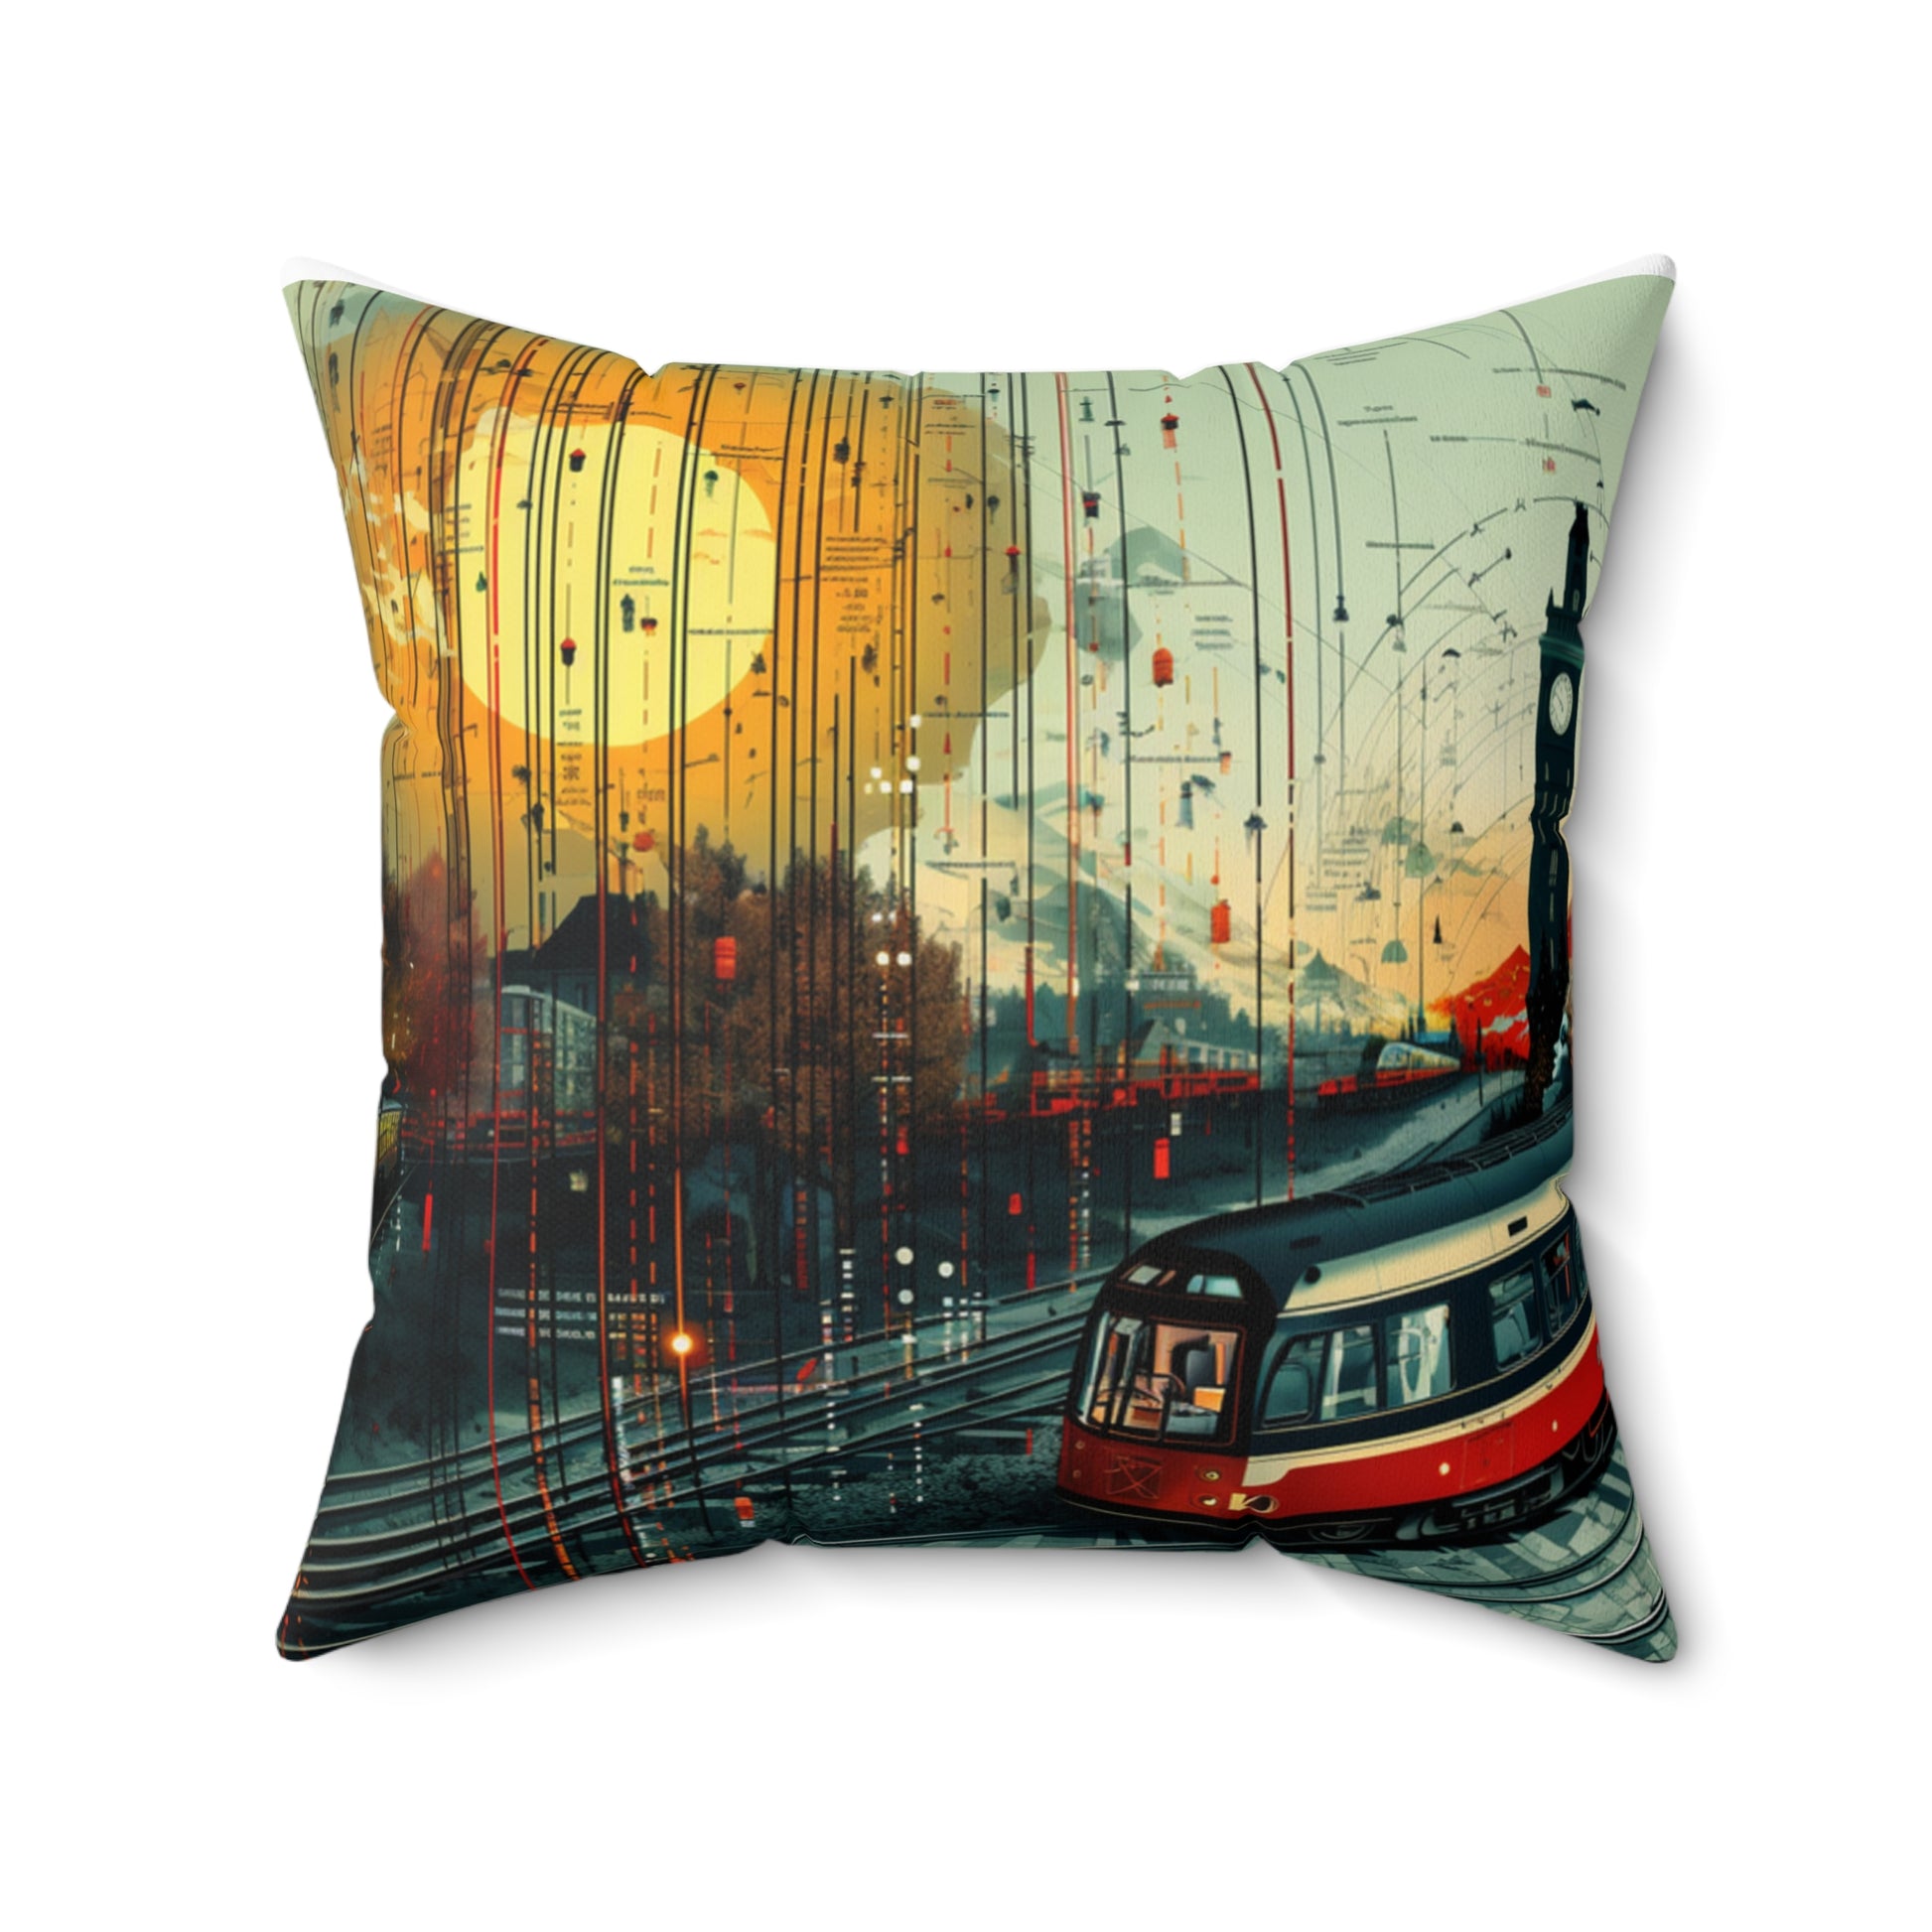 Stashbox Train Design #002: Bauhaus Style Pillow